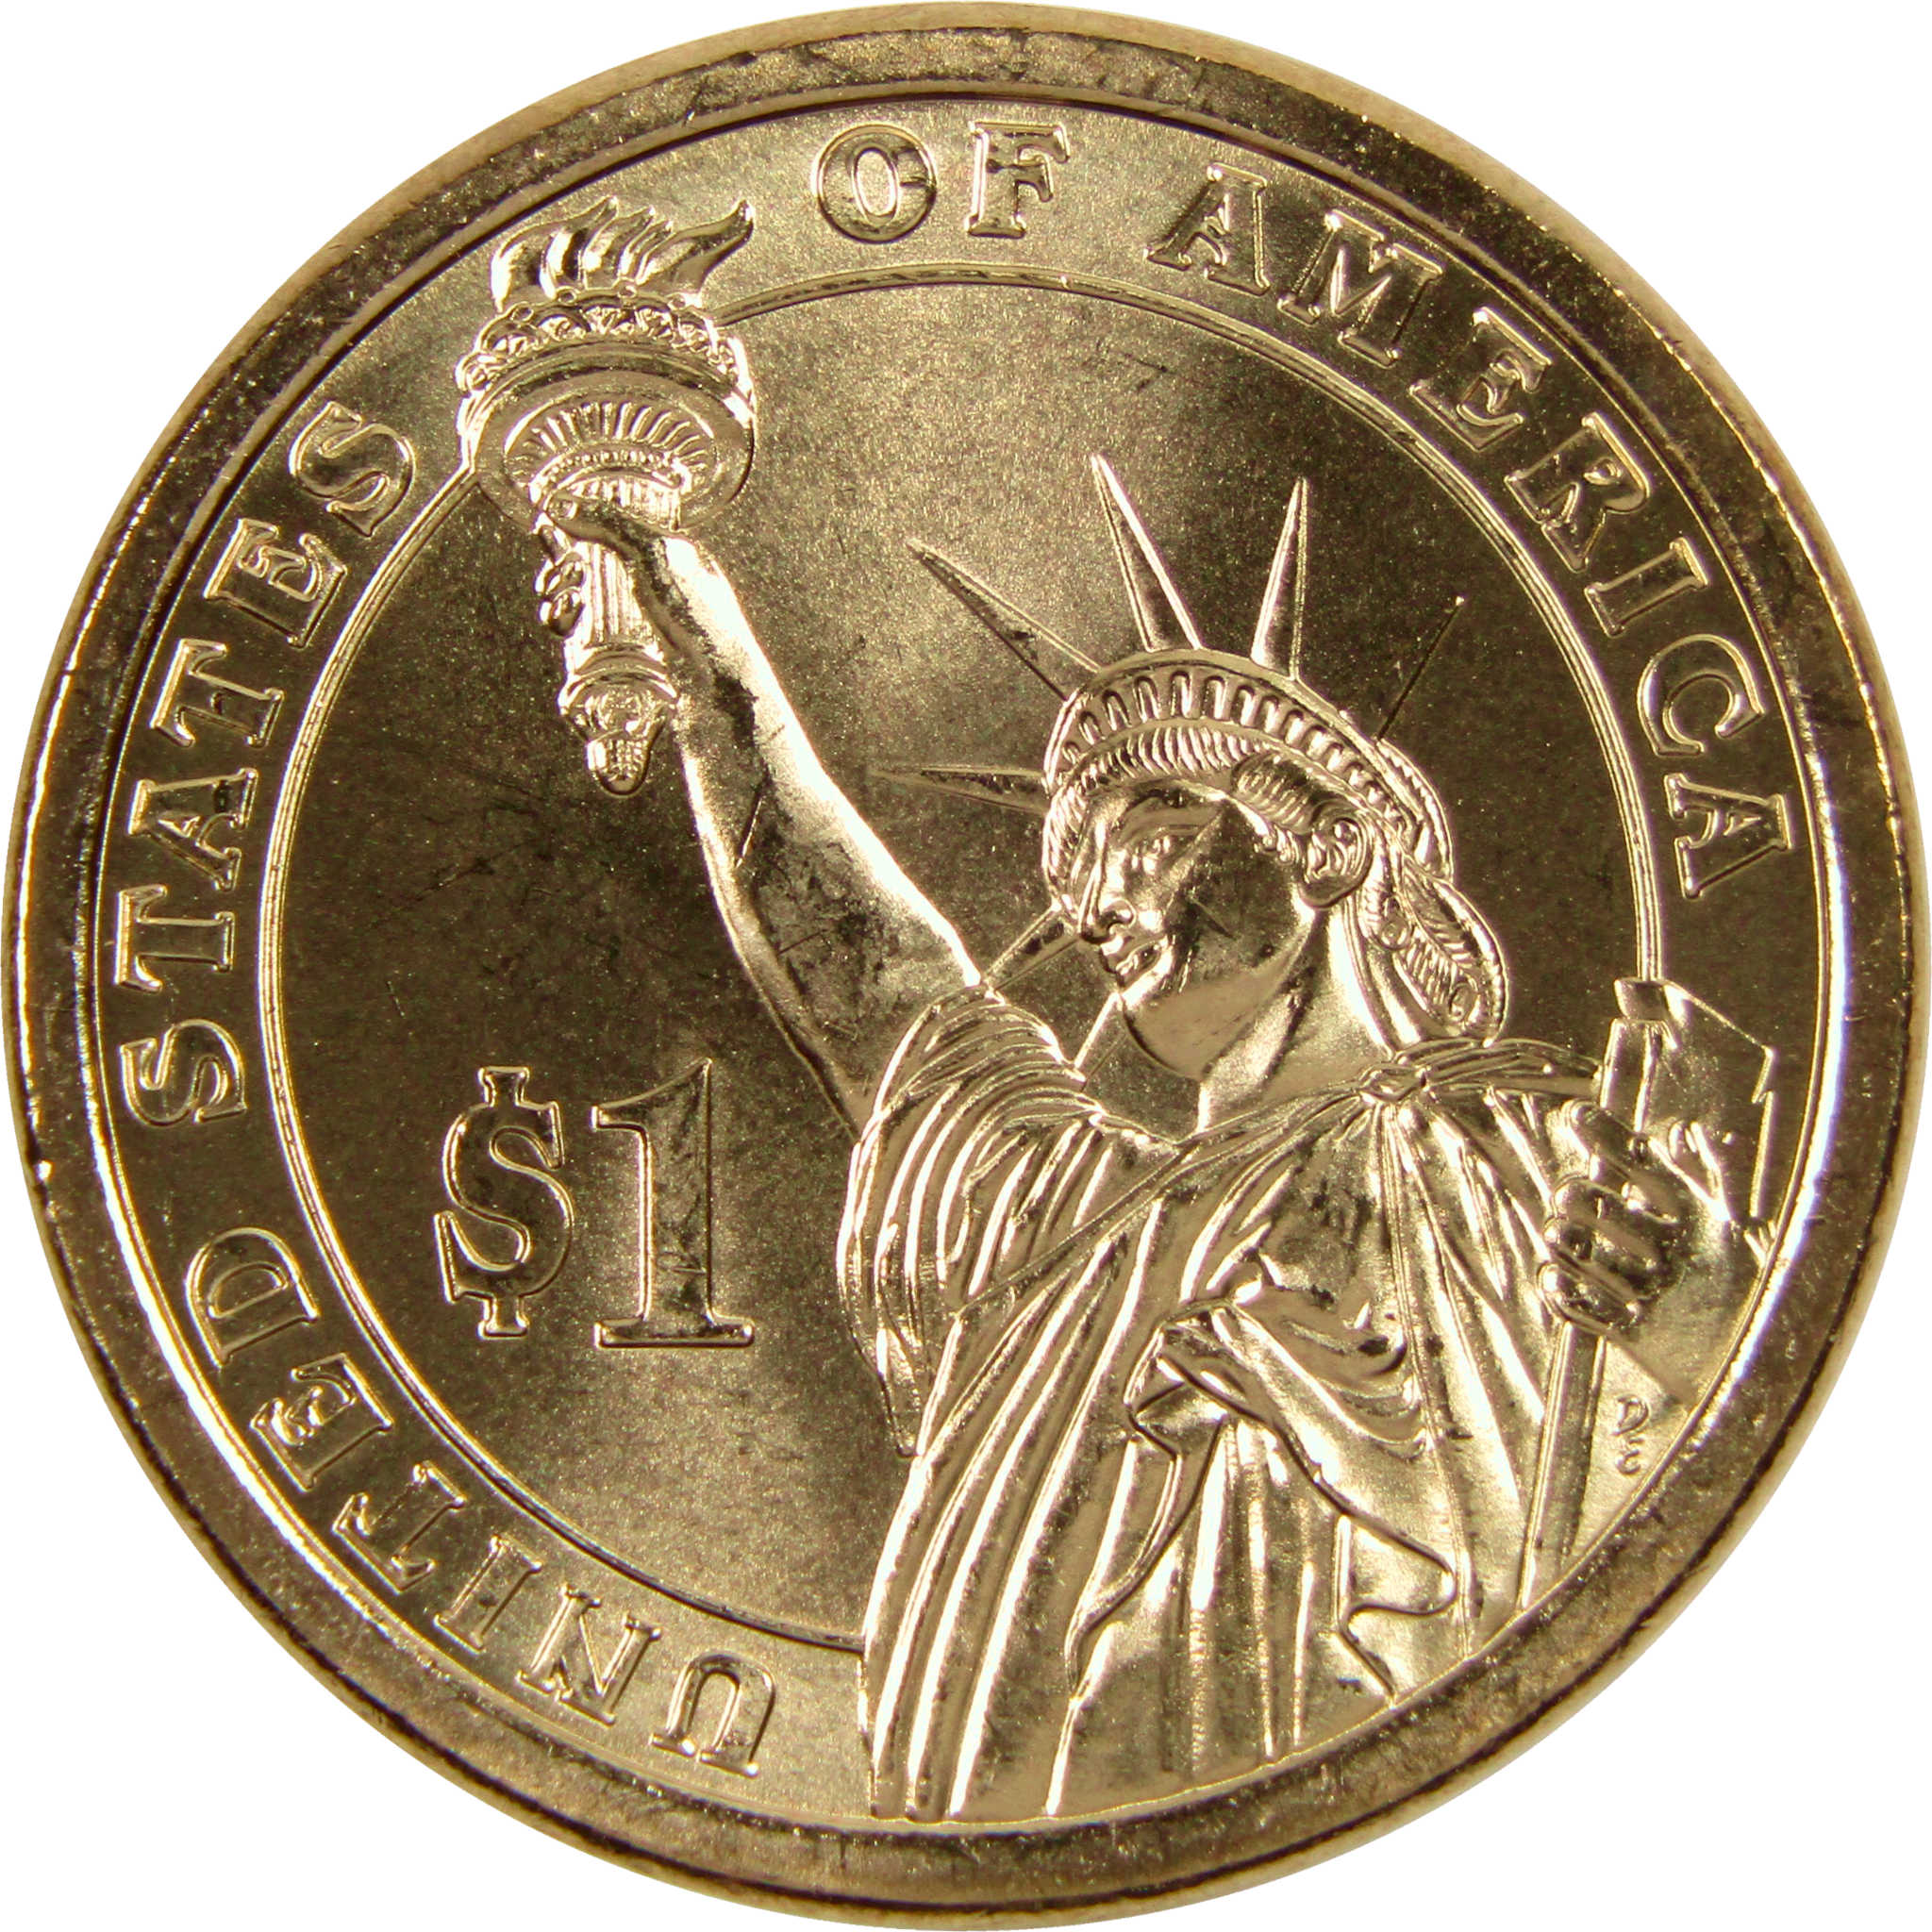 2007 P John Adams Presidential Dollar BU Uncirculated $1 Coin